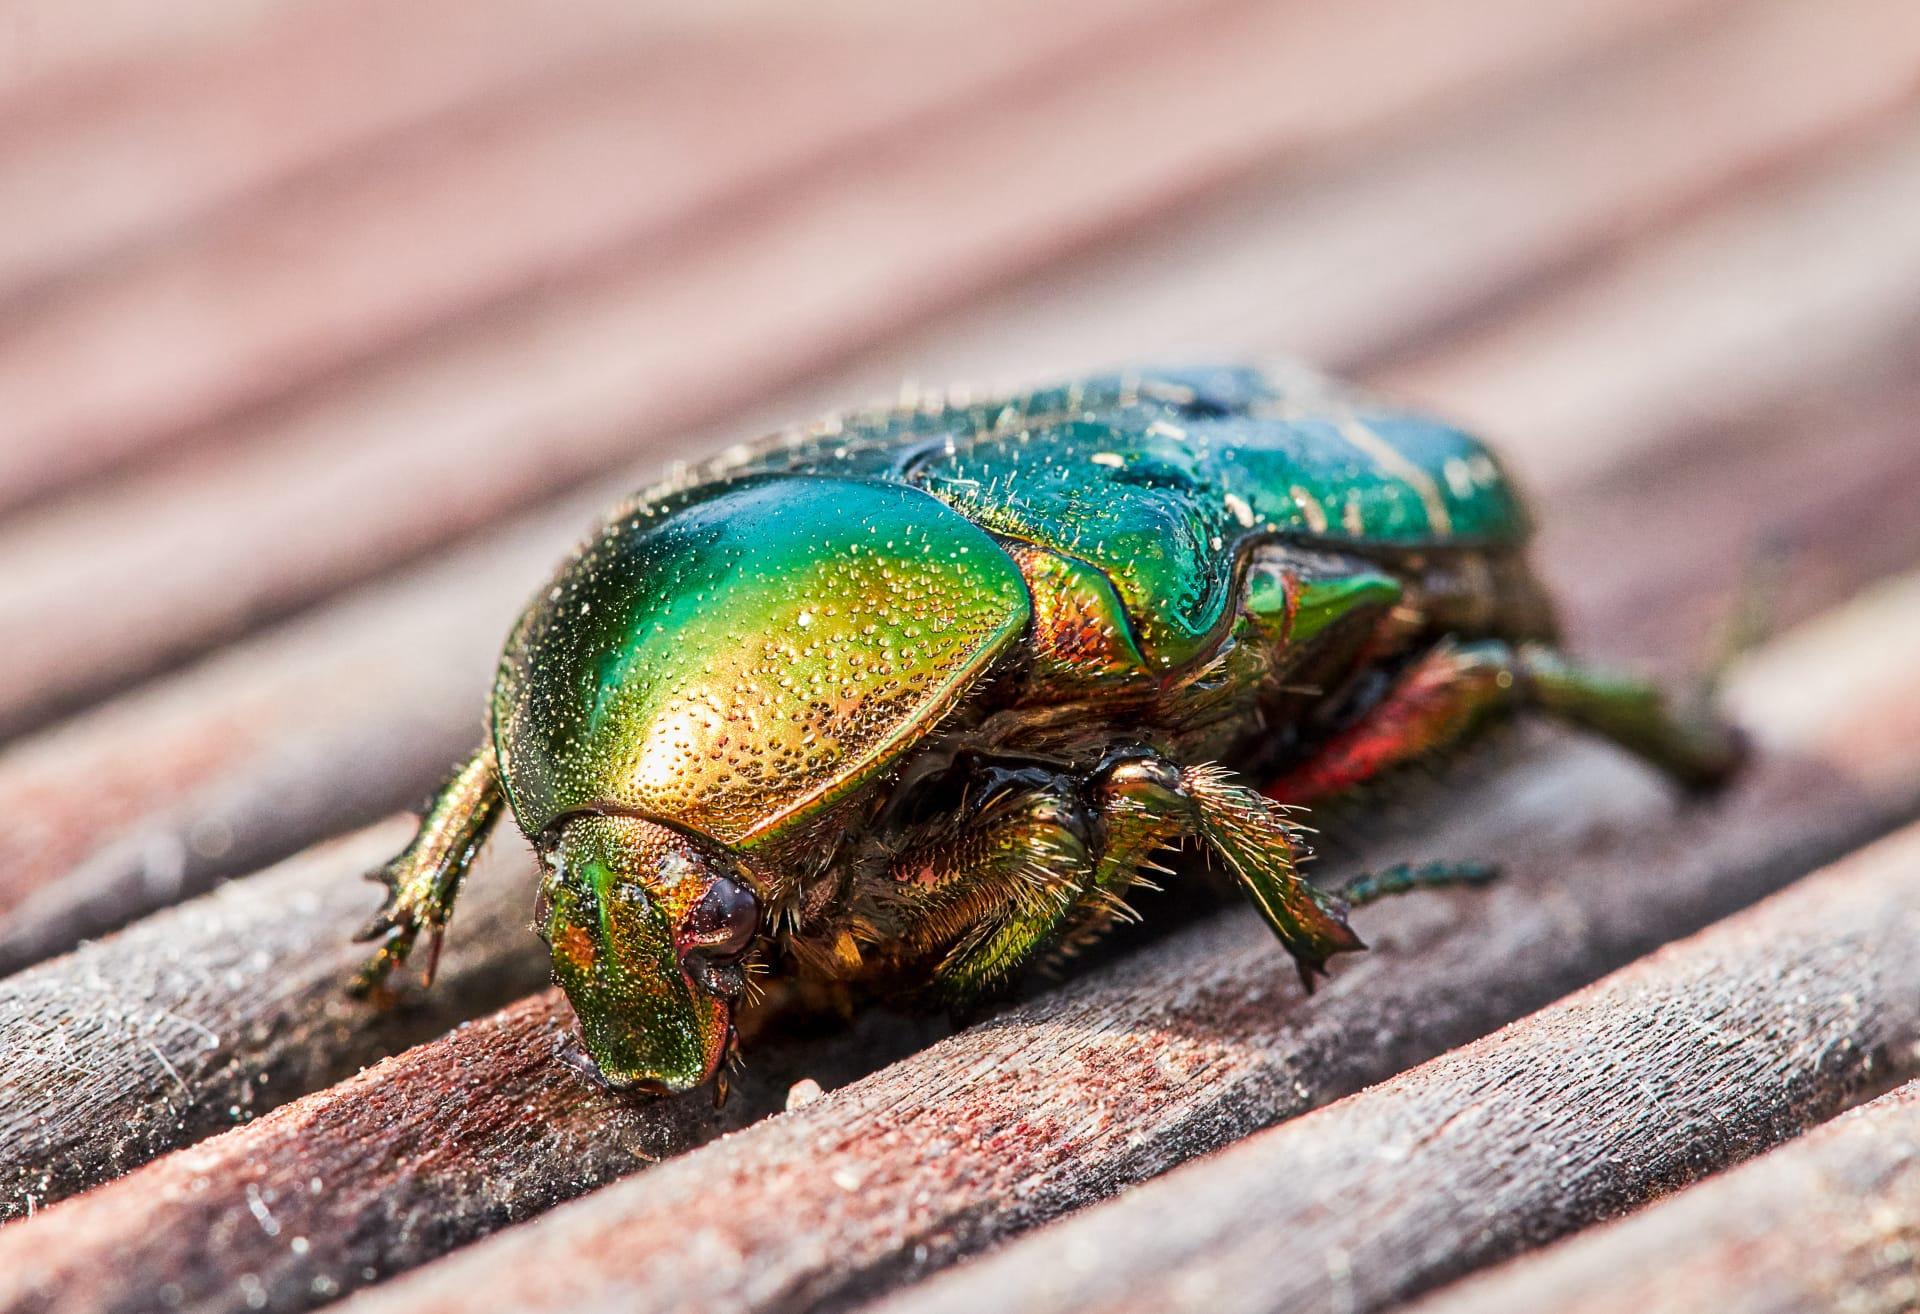 Green june beetle pictures